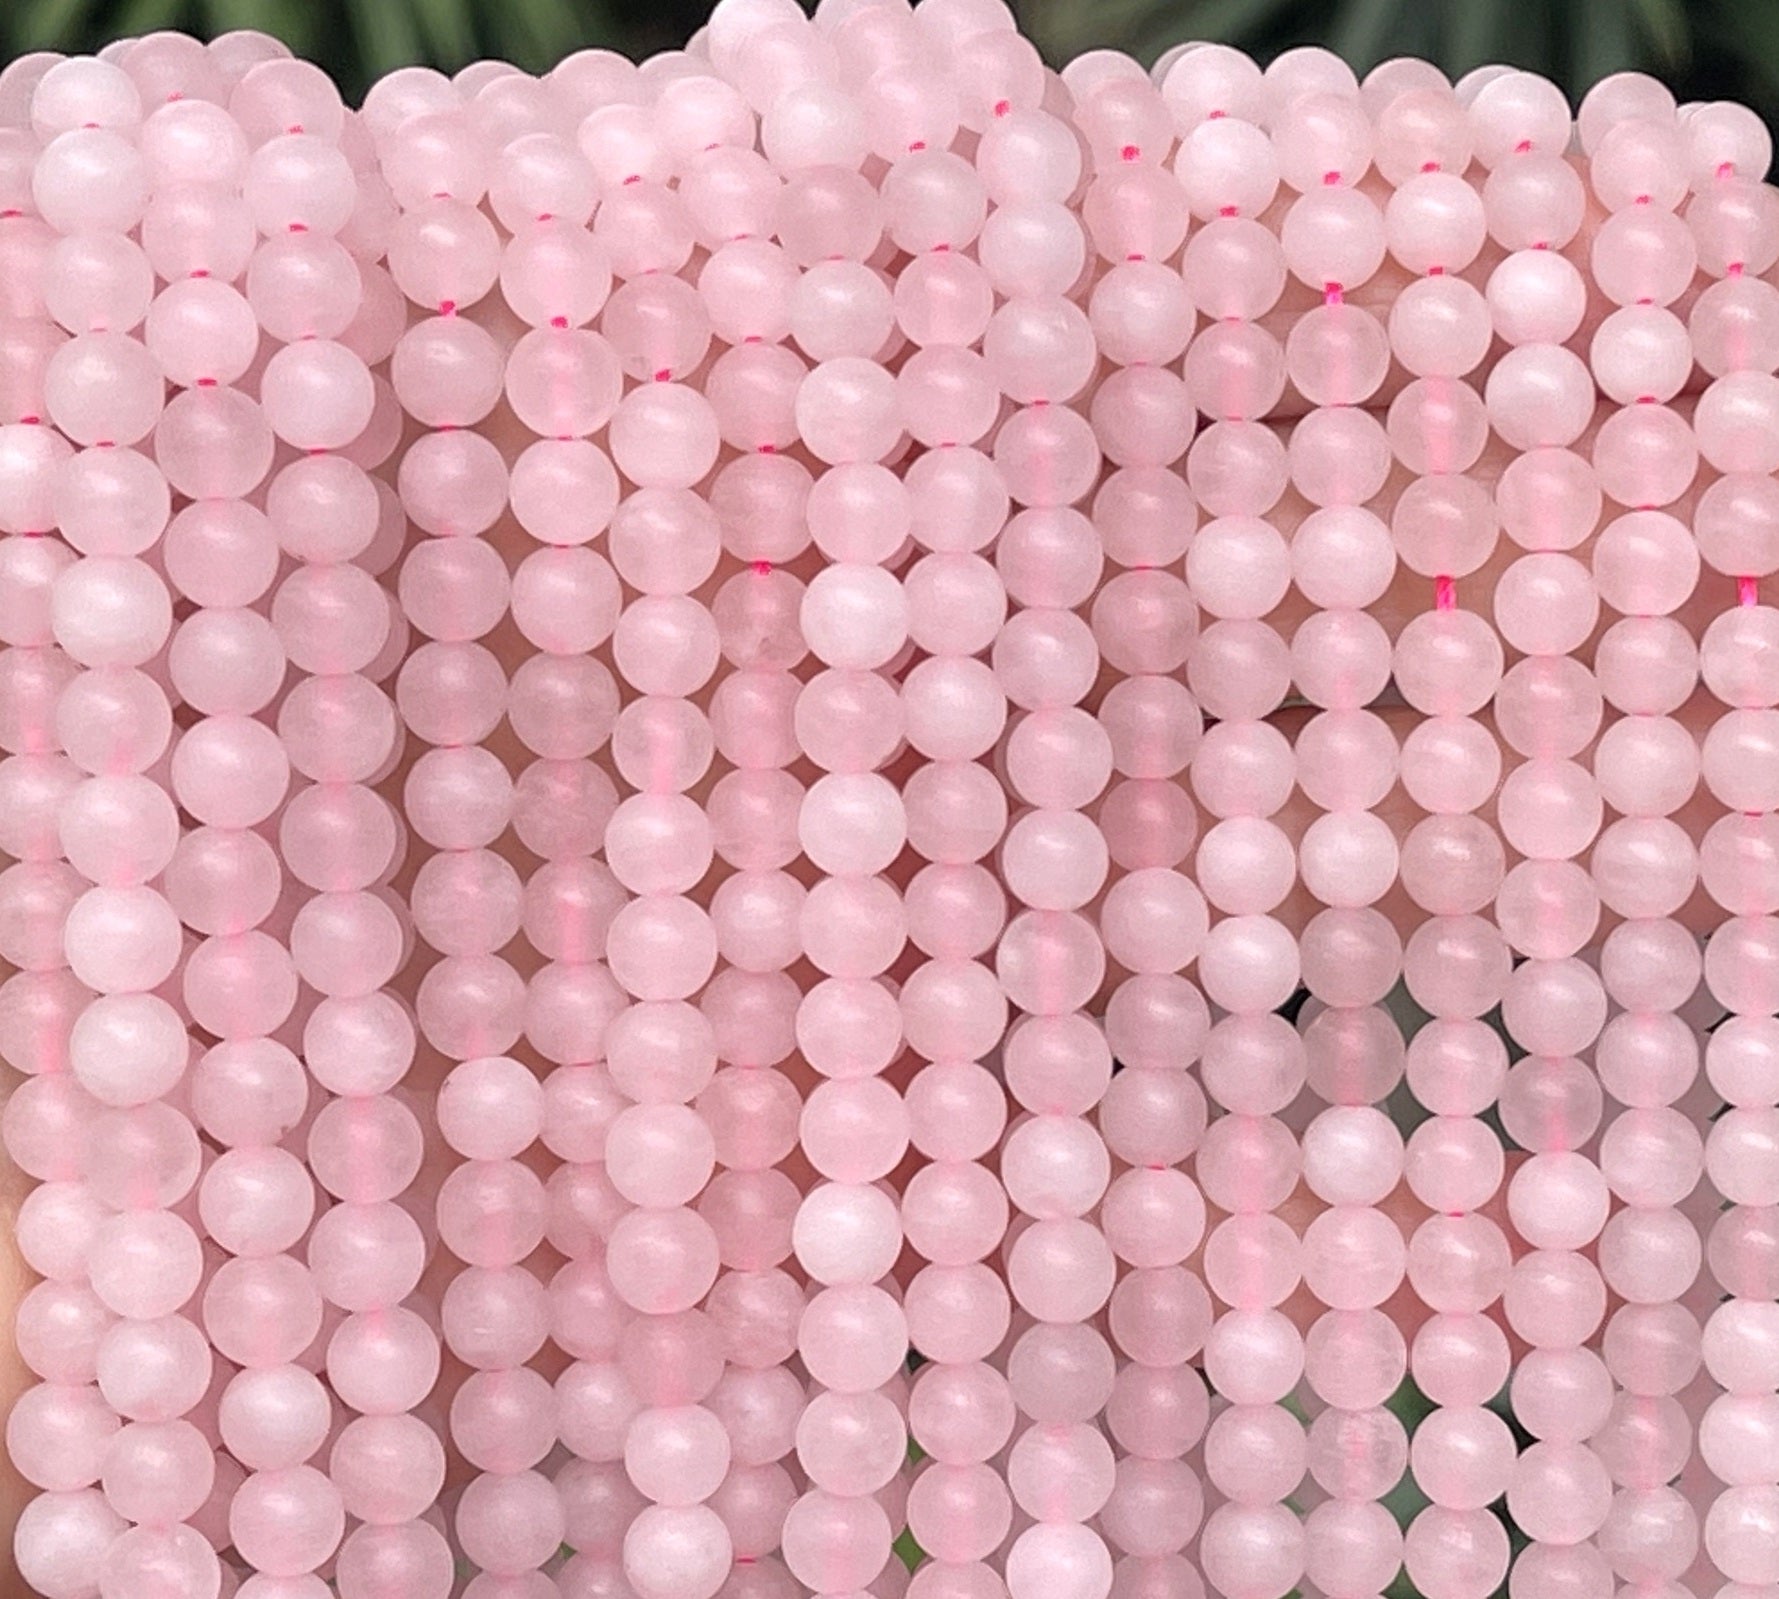 Rose Quartz matte 6mm round natural gemstone beads 15.5" strand